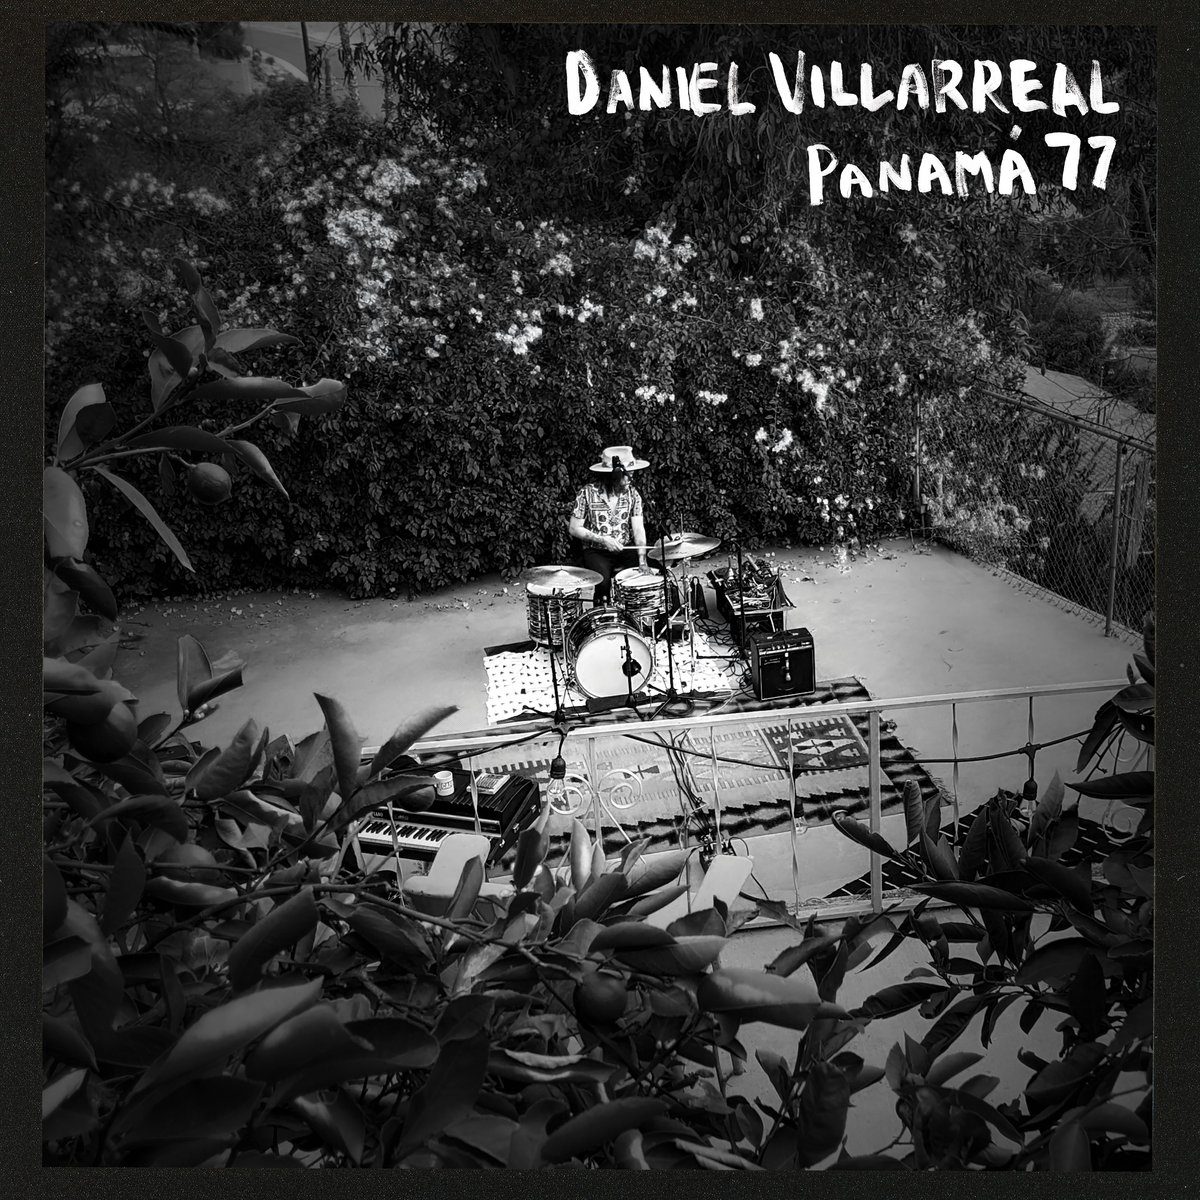 Daniel Villareal – Panama 77